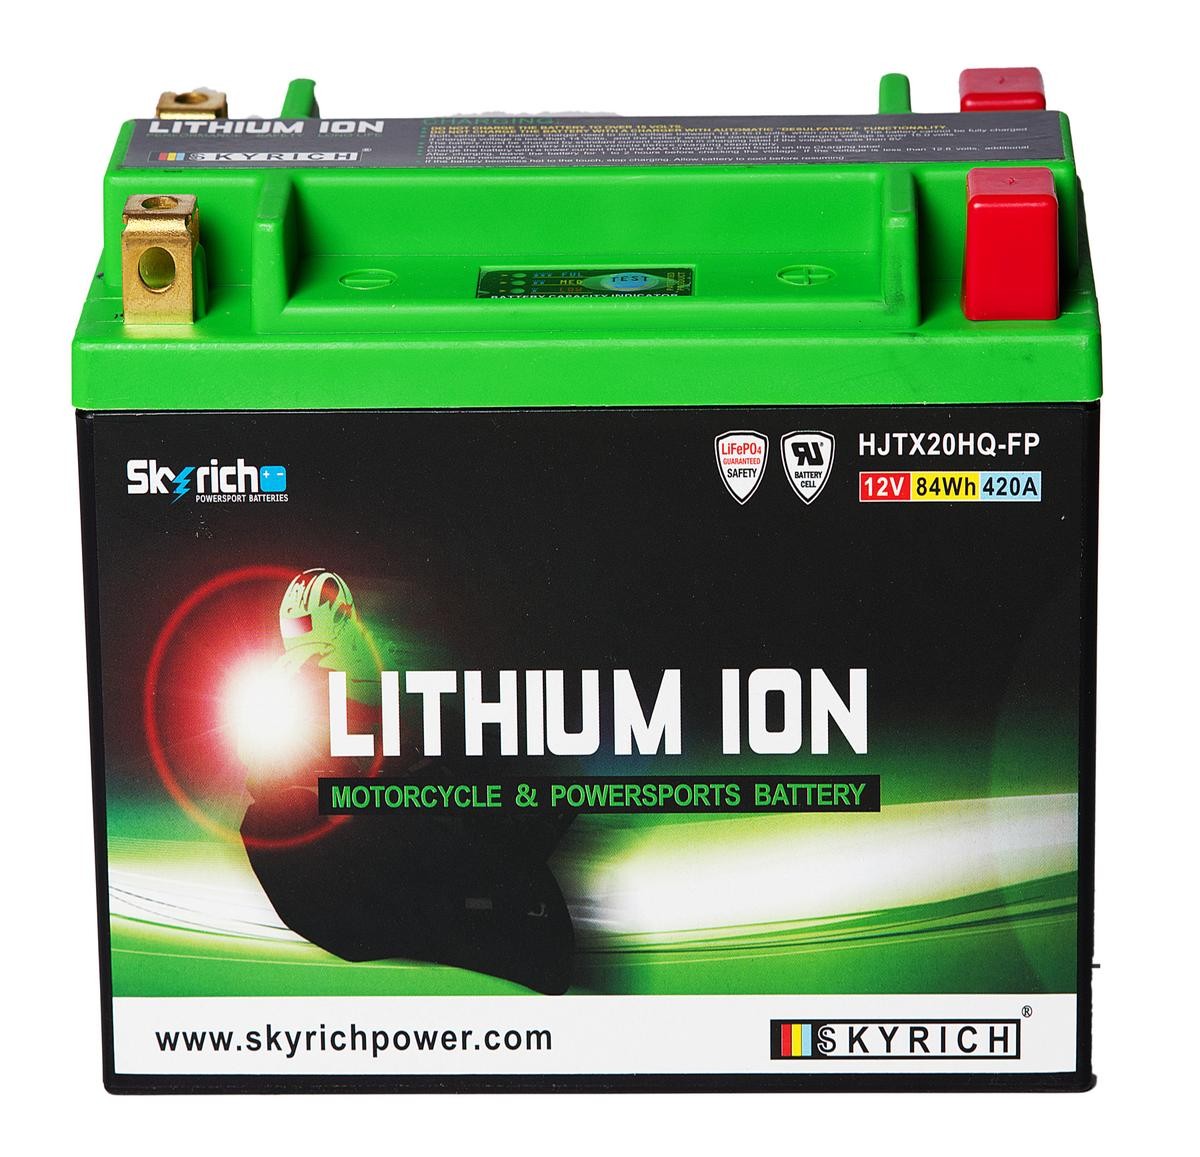 DUCATI 906 Batterie 12V 7Ah 420A N Li-Ionen-Batterie SKYRICH LITHIUM ION HJTX20HQ-FP